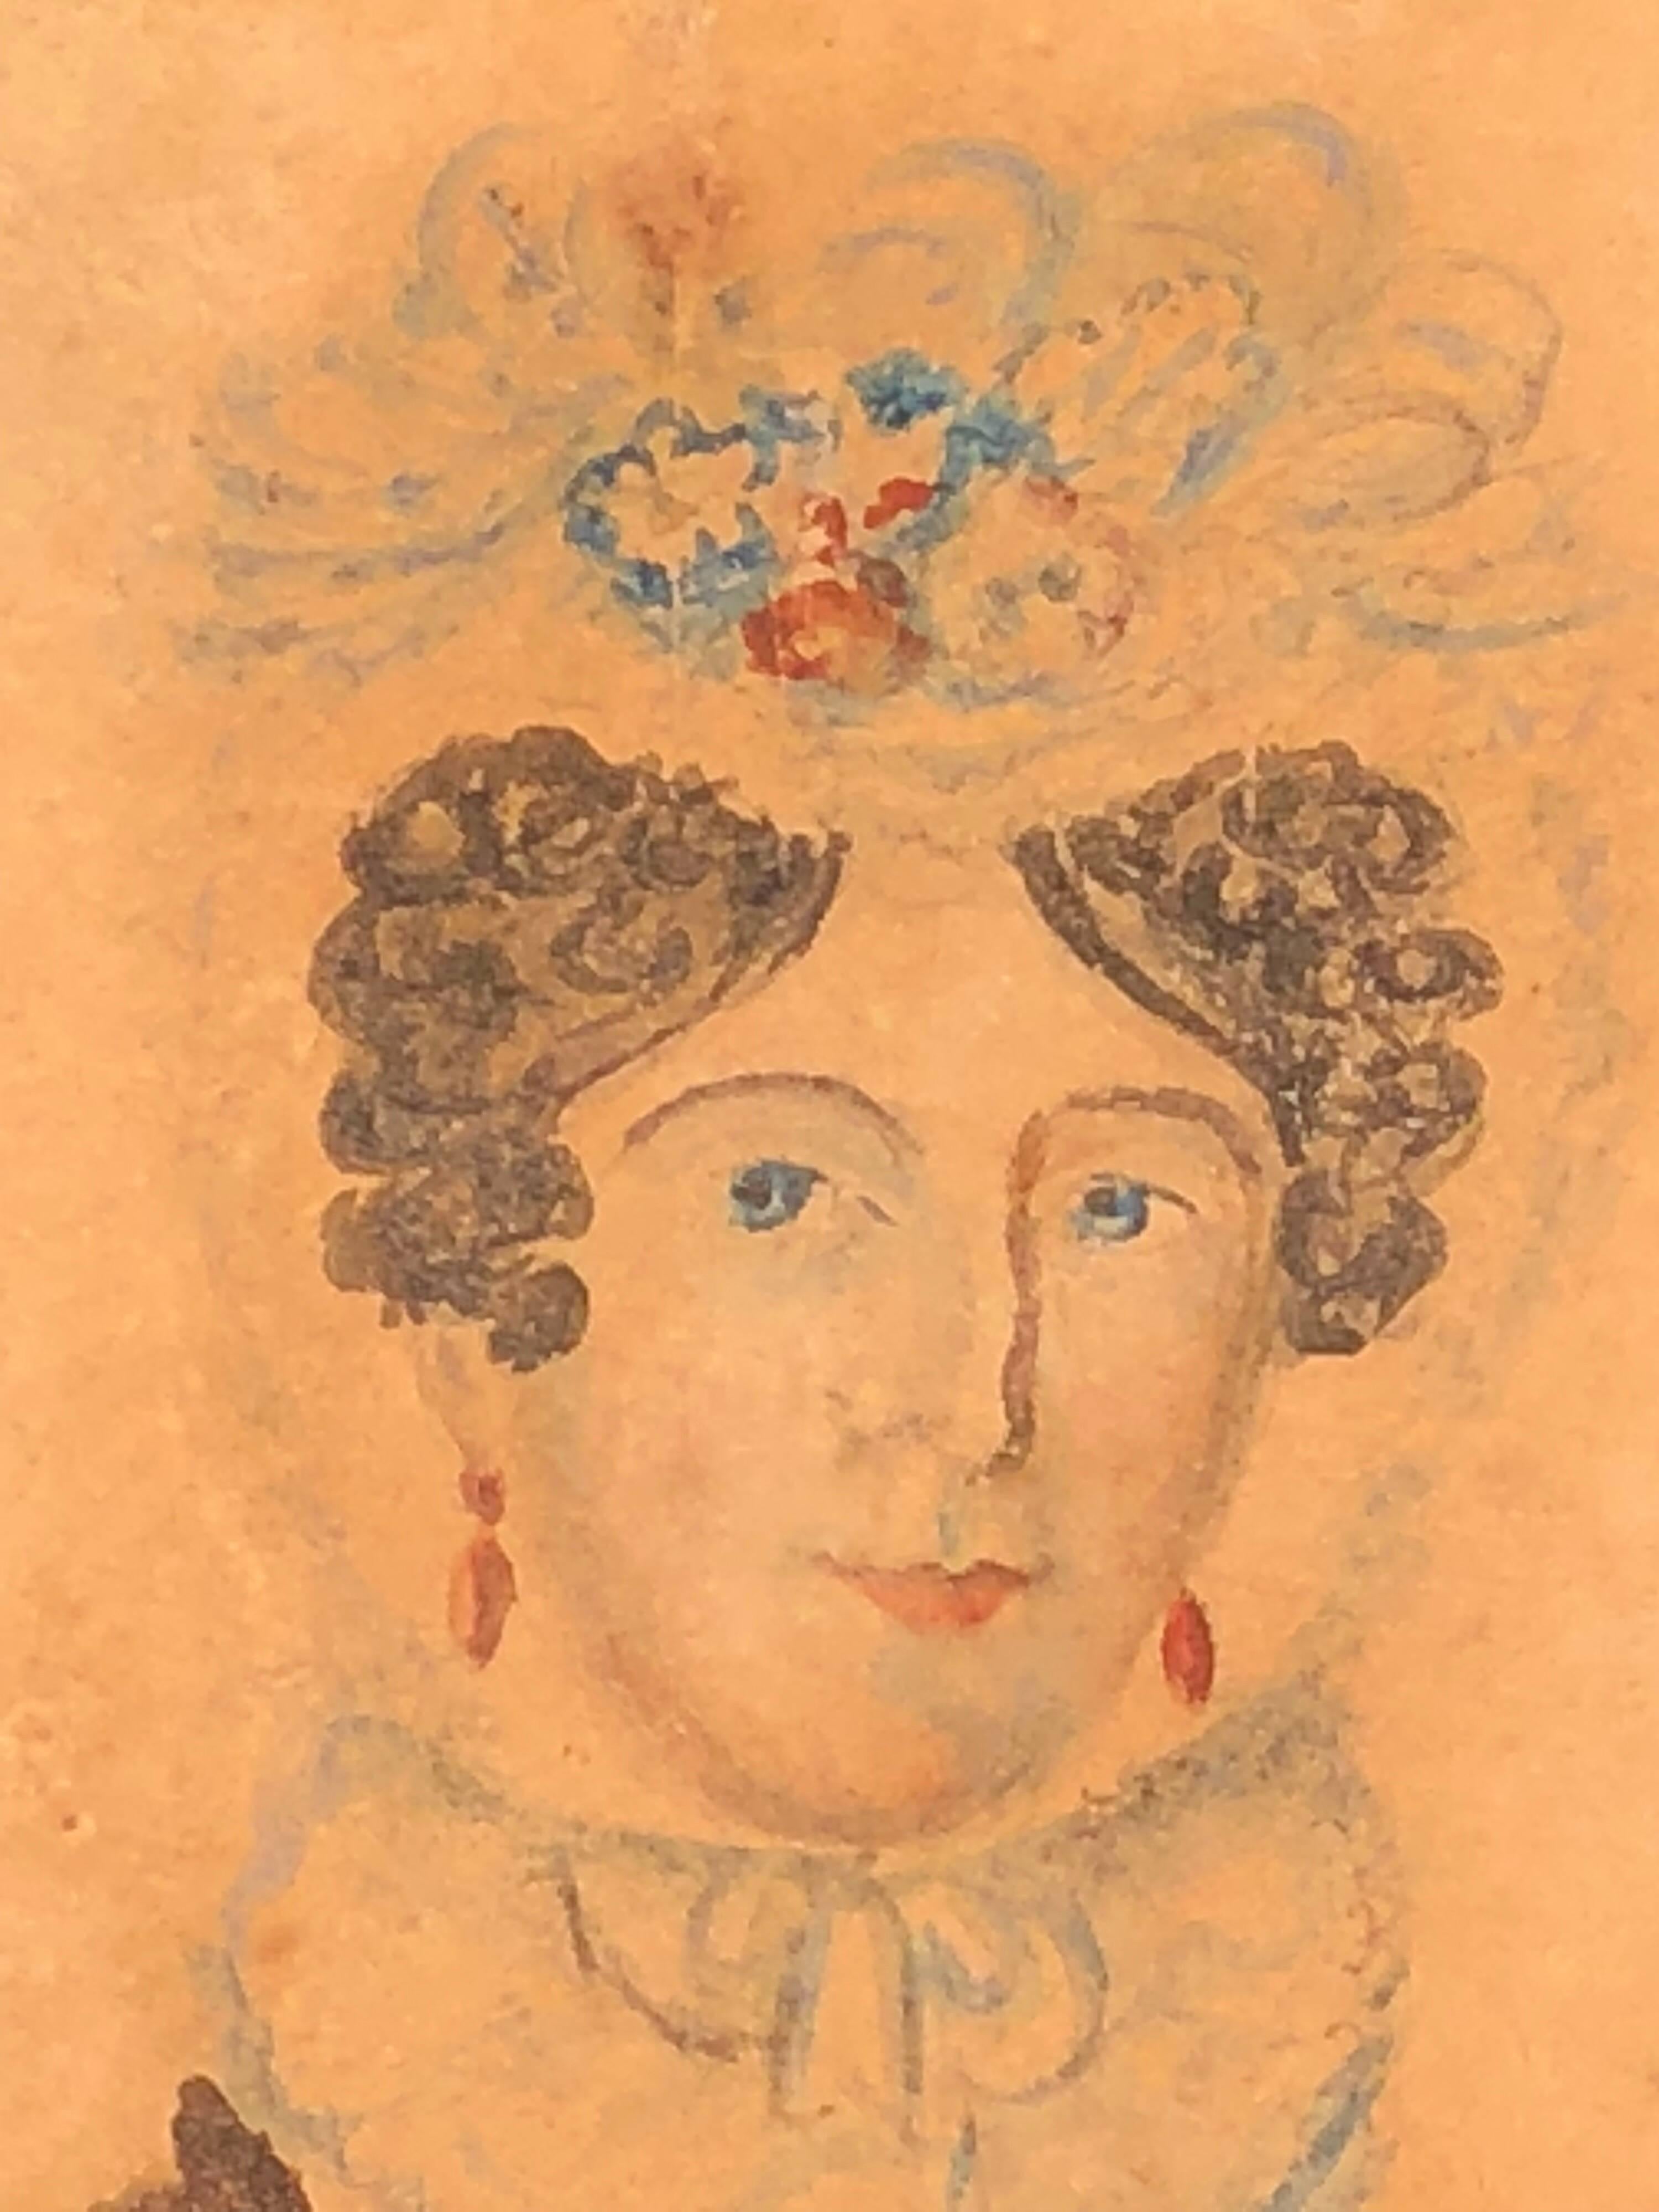 Folk Art miniature watercolor of fancy lady on paper
New England, circa 1830.